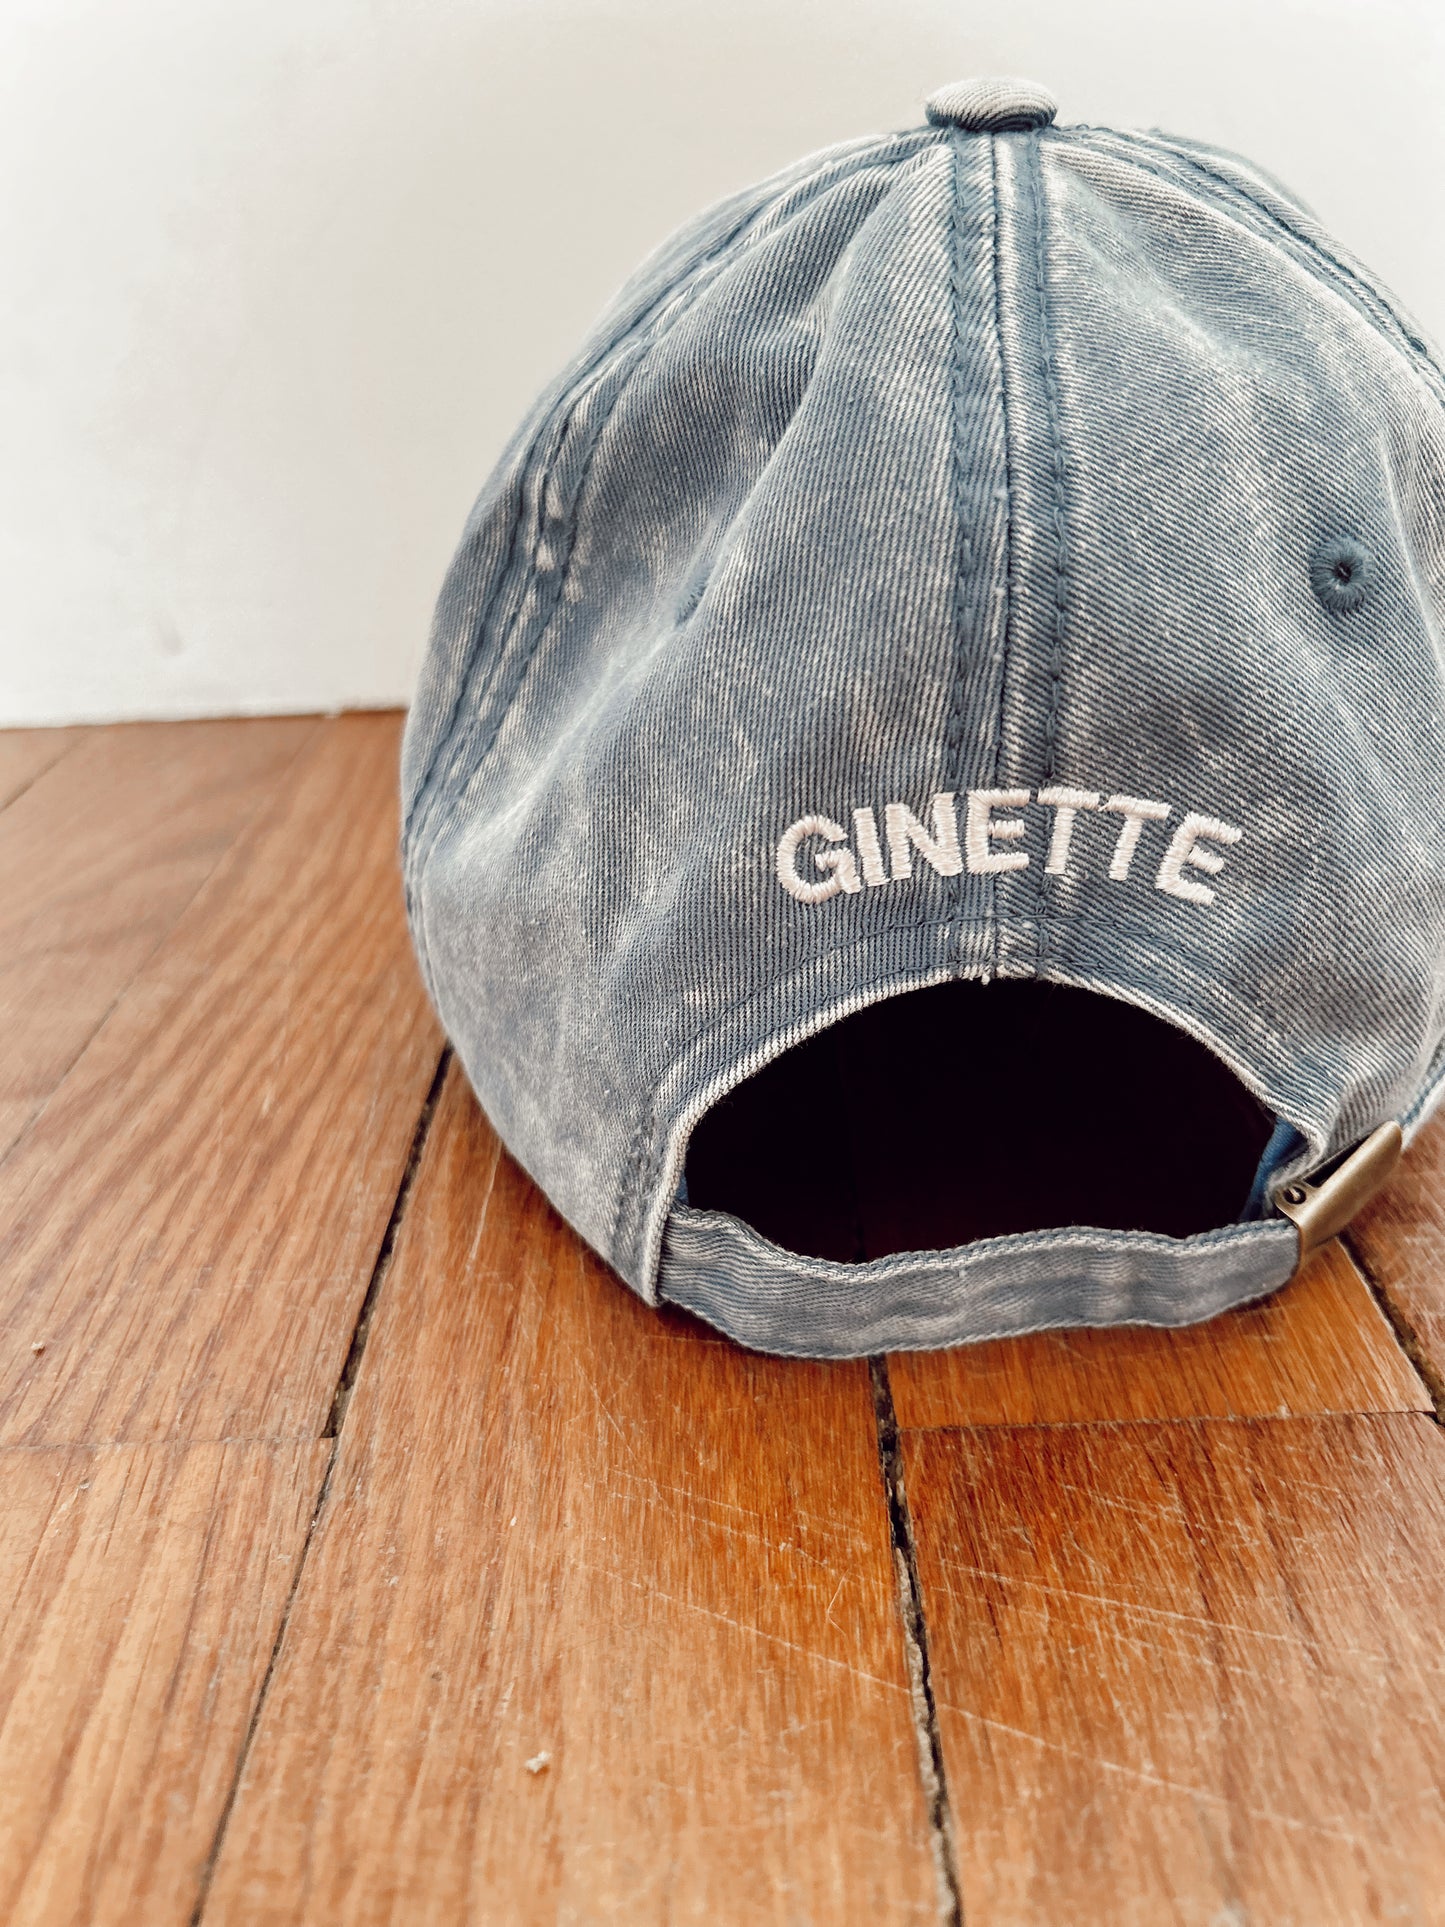 The Ginette cap - Denim blue